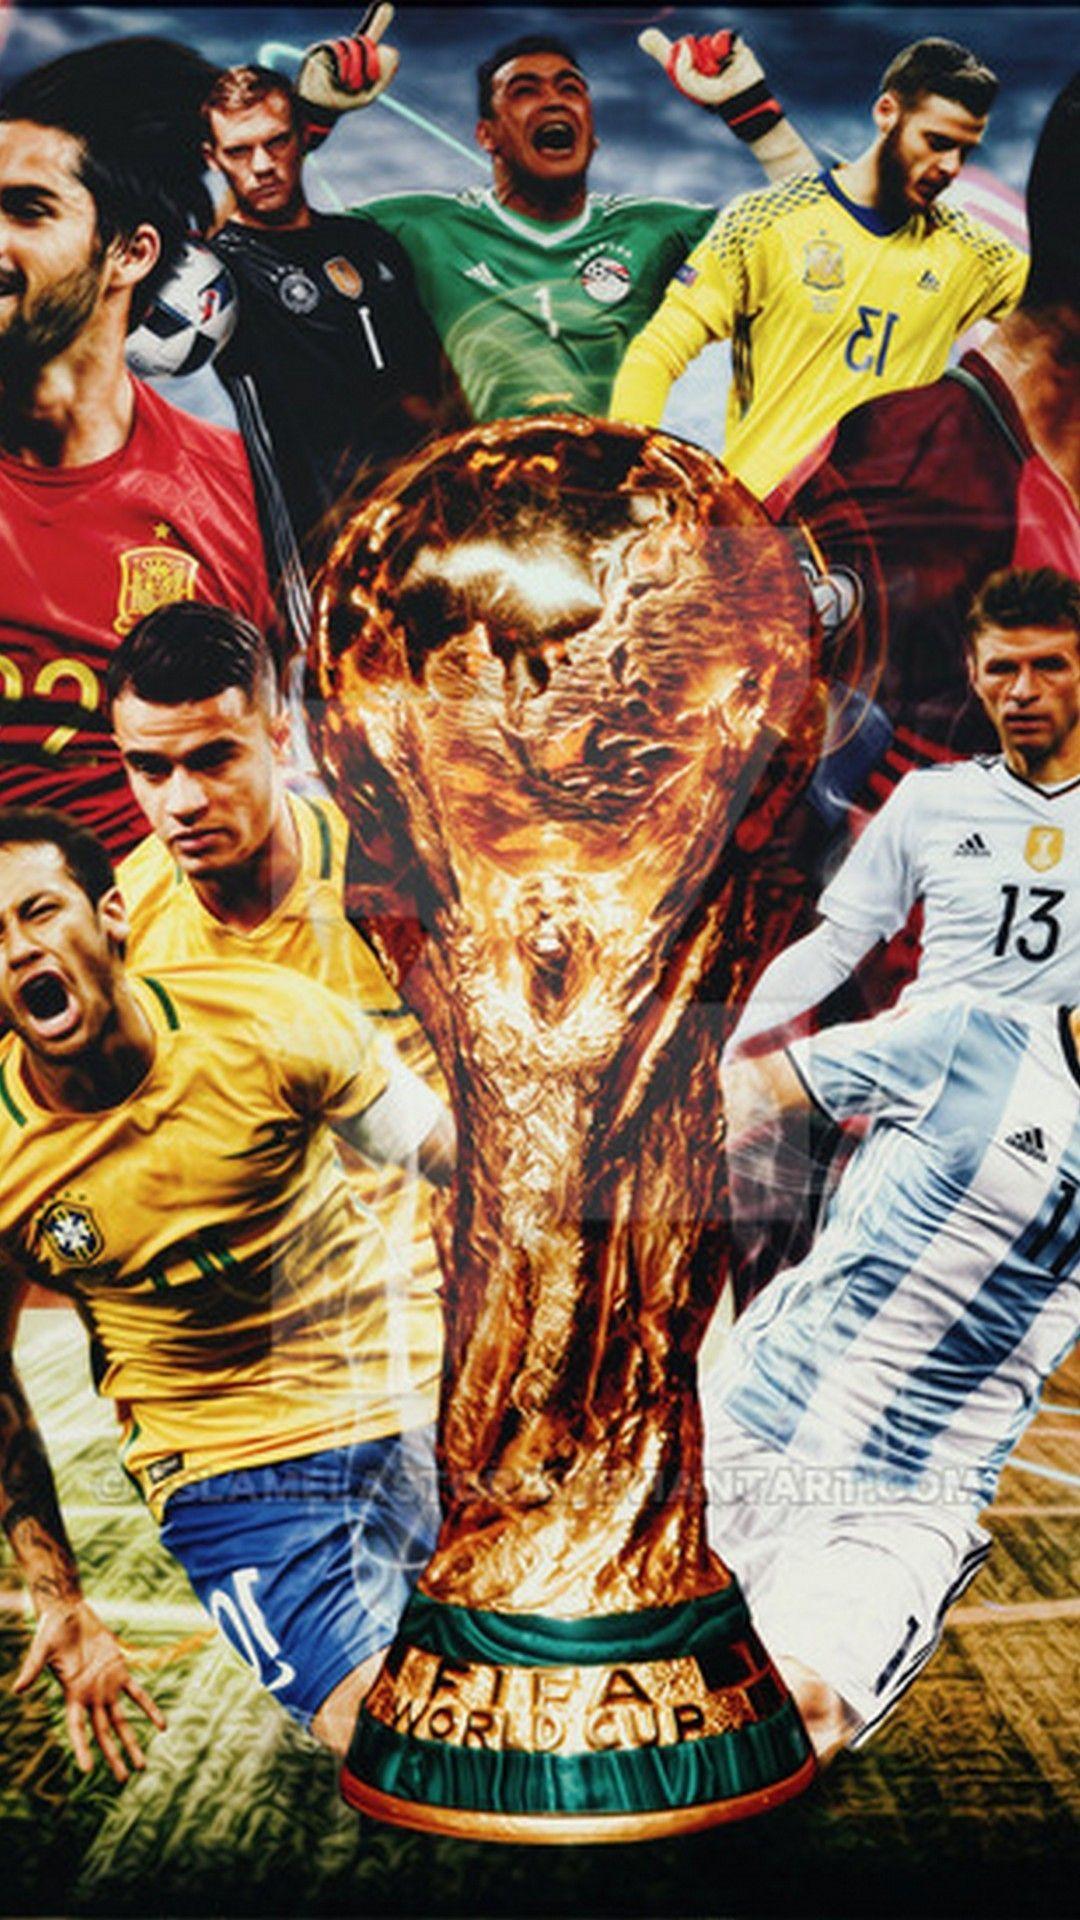 Wallpaper FIFA World Cup. LA COUPE DE MANDE. Android